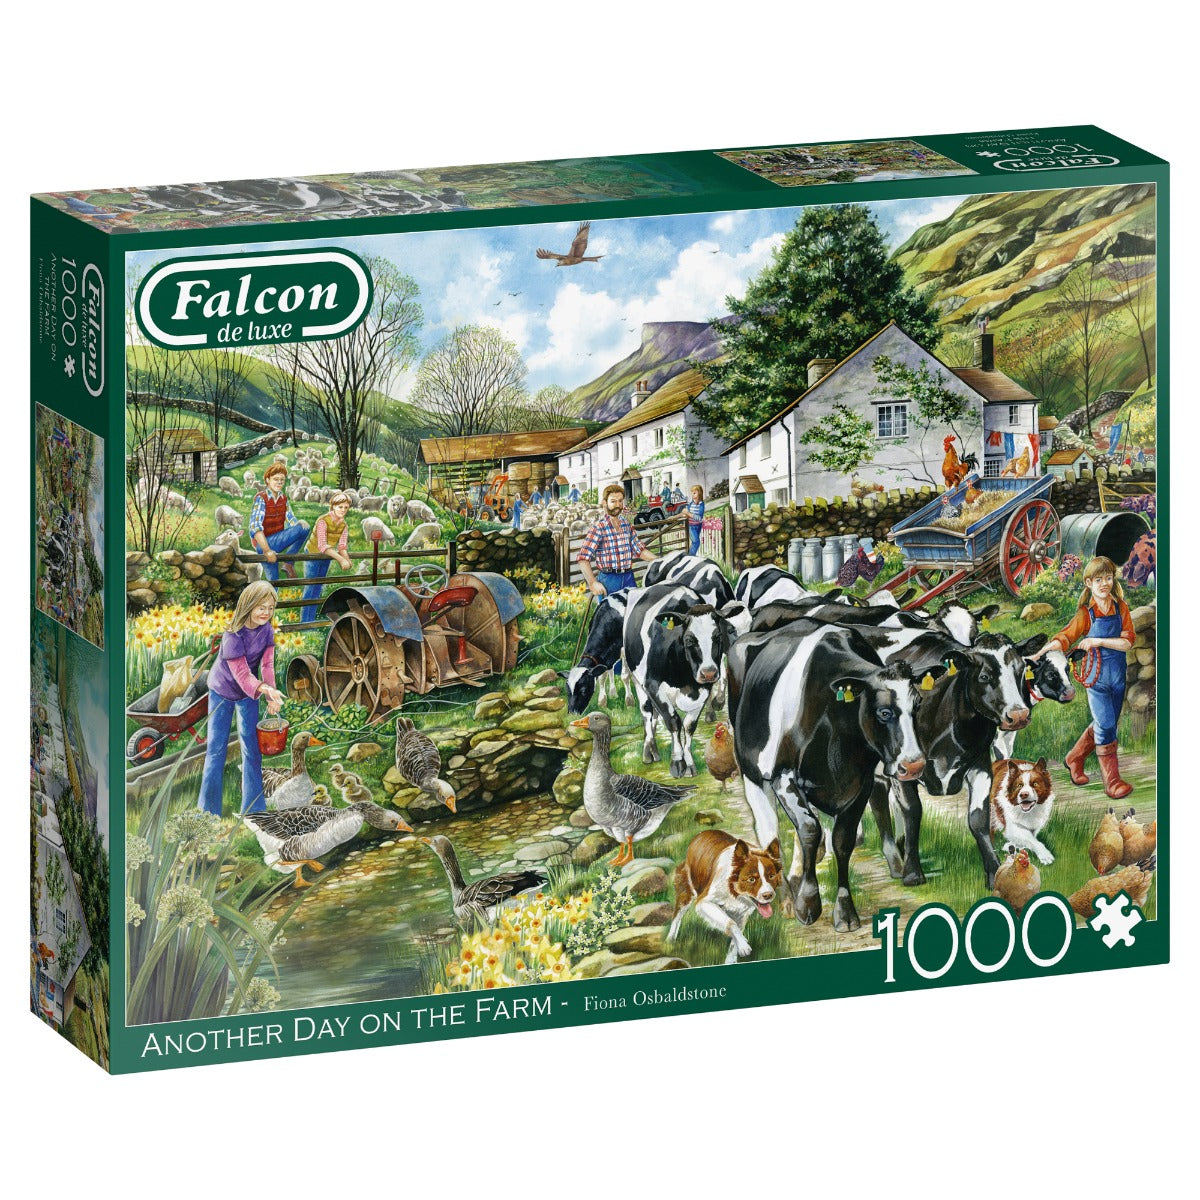 Farm Animals Jigsaw Puzzles in a Box